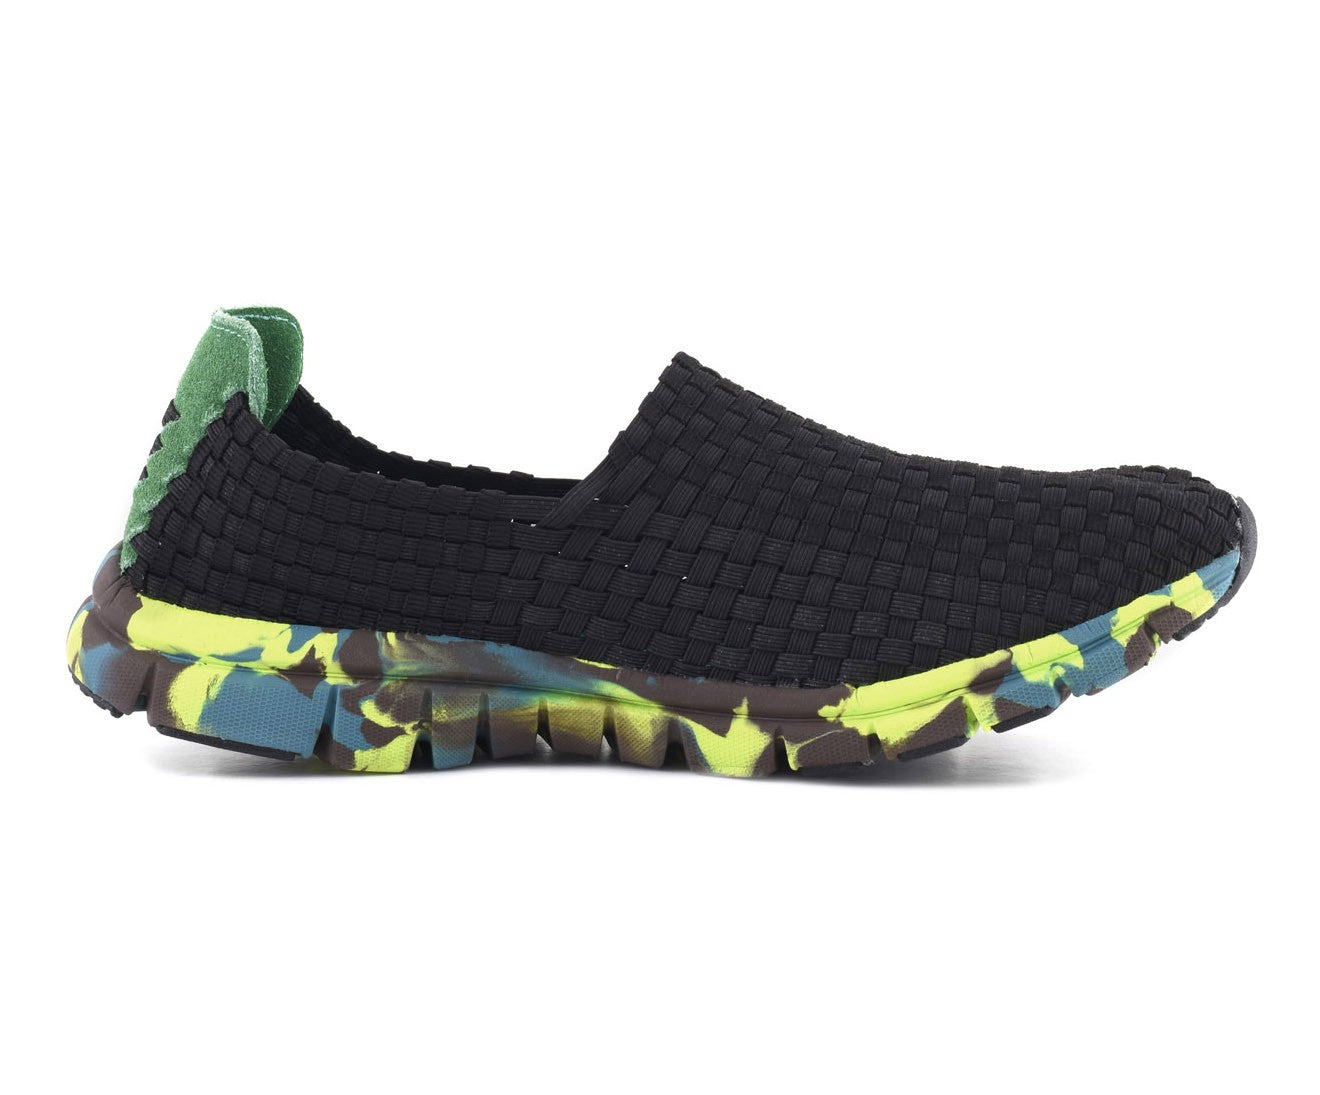 Running Sneaker In Colored Woven Elastics